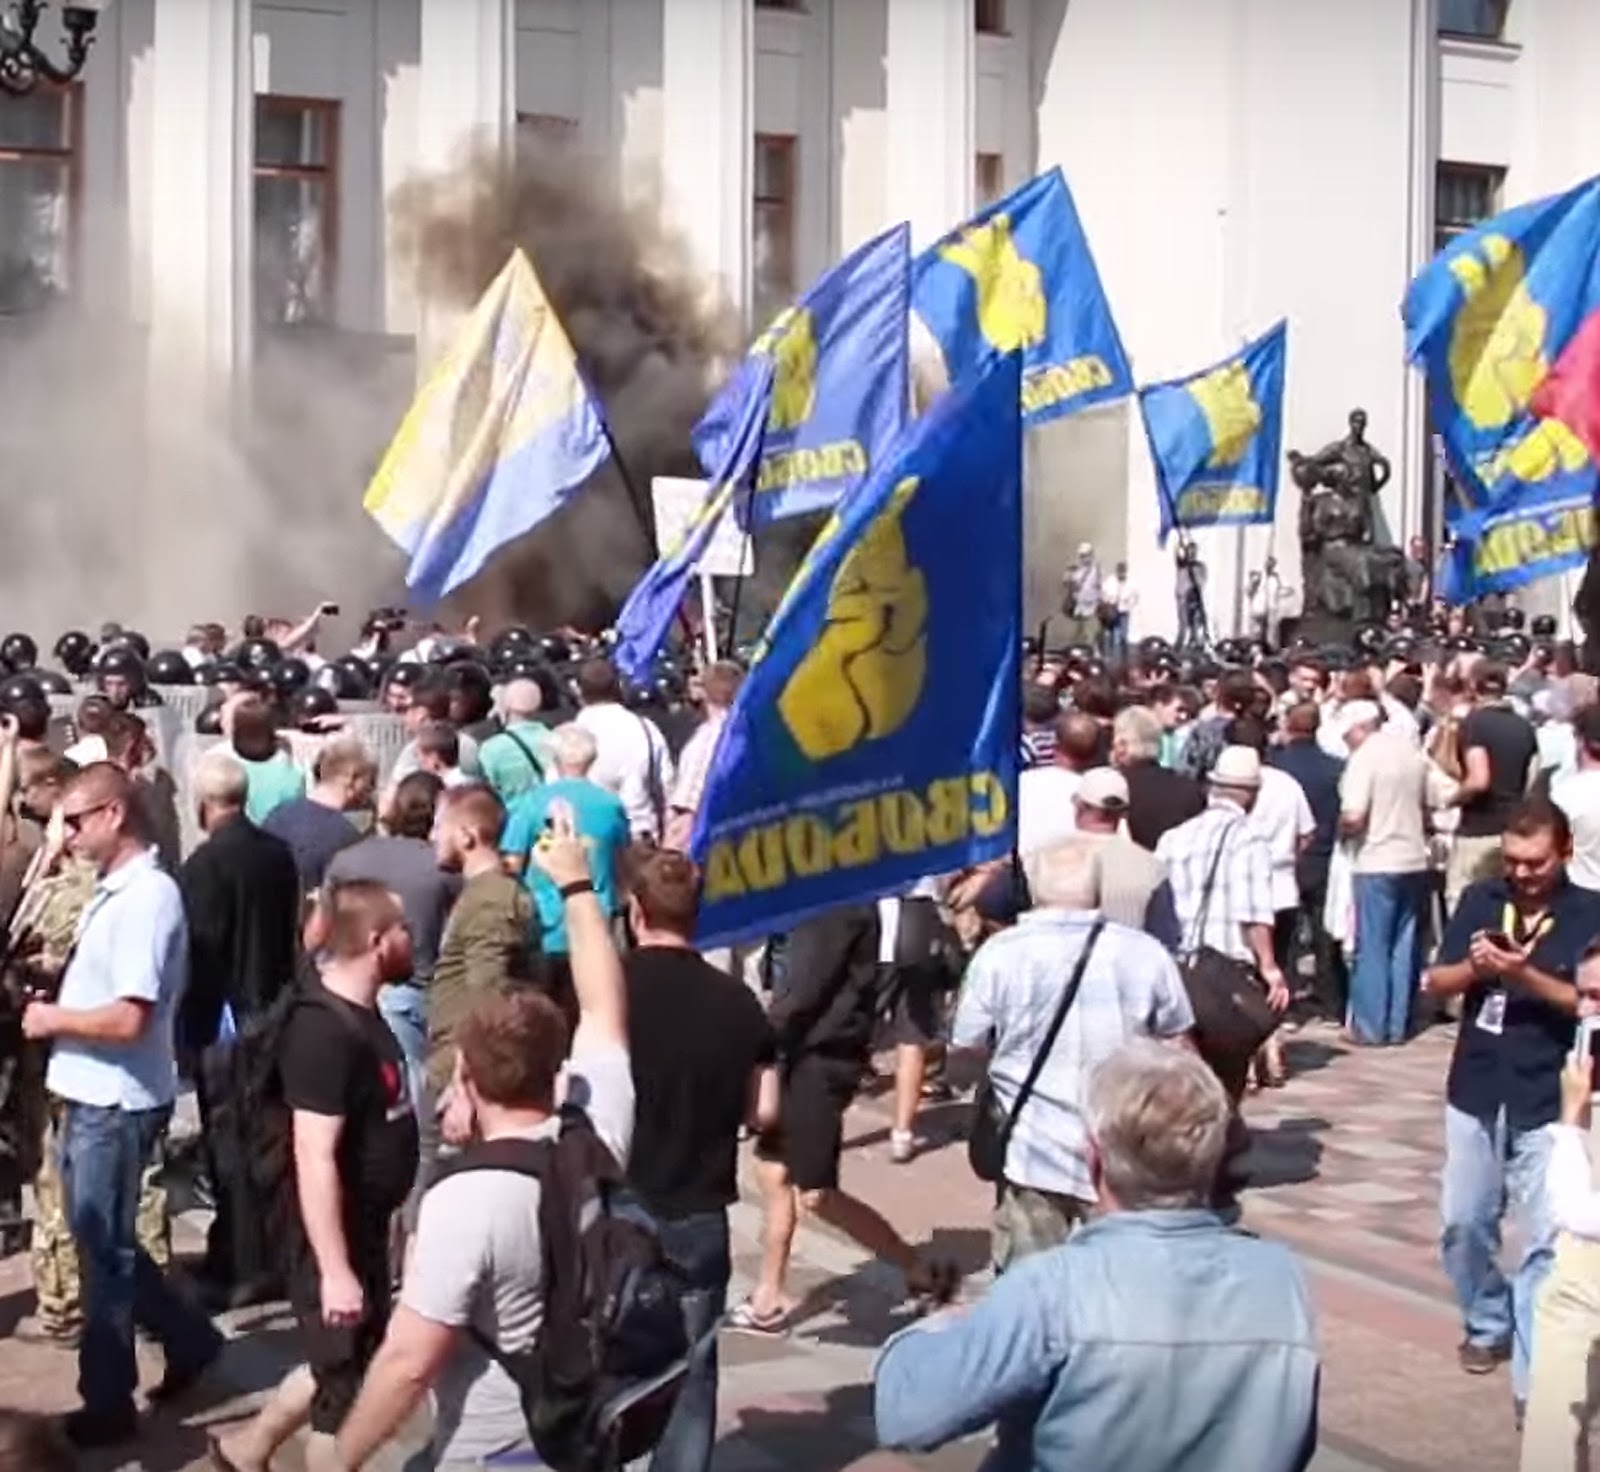 Украинцы радуются теракту в крокусе. Украинцы радуются. Украинцы радуются проигрышу России. Украинцы радуются теракту.